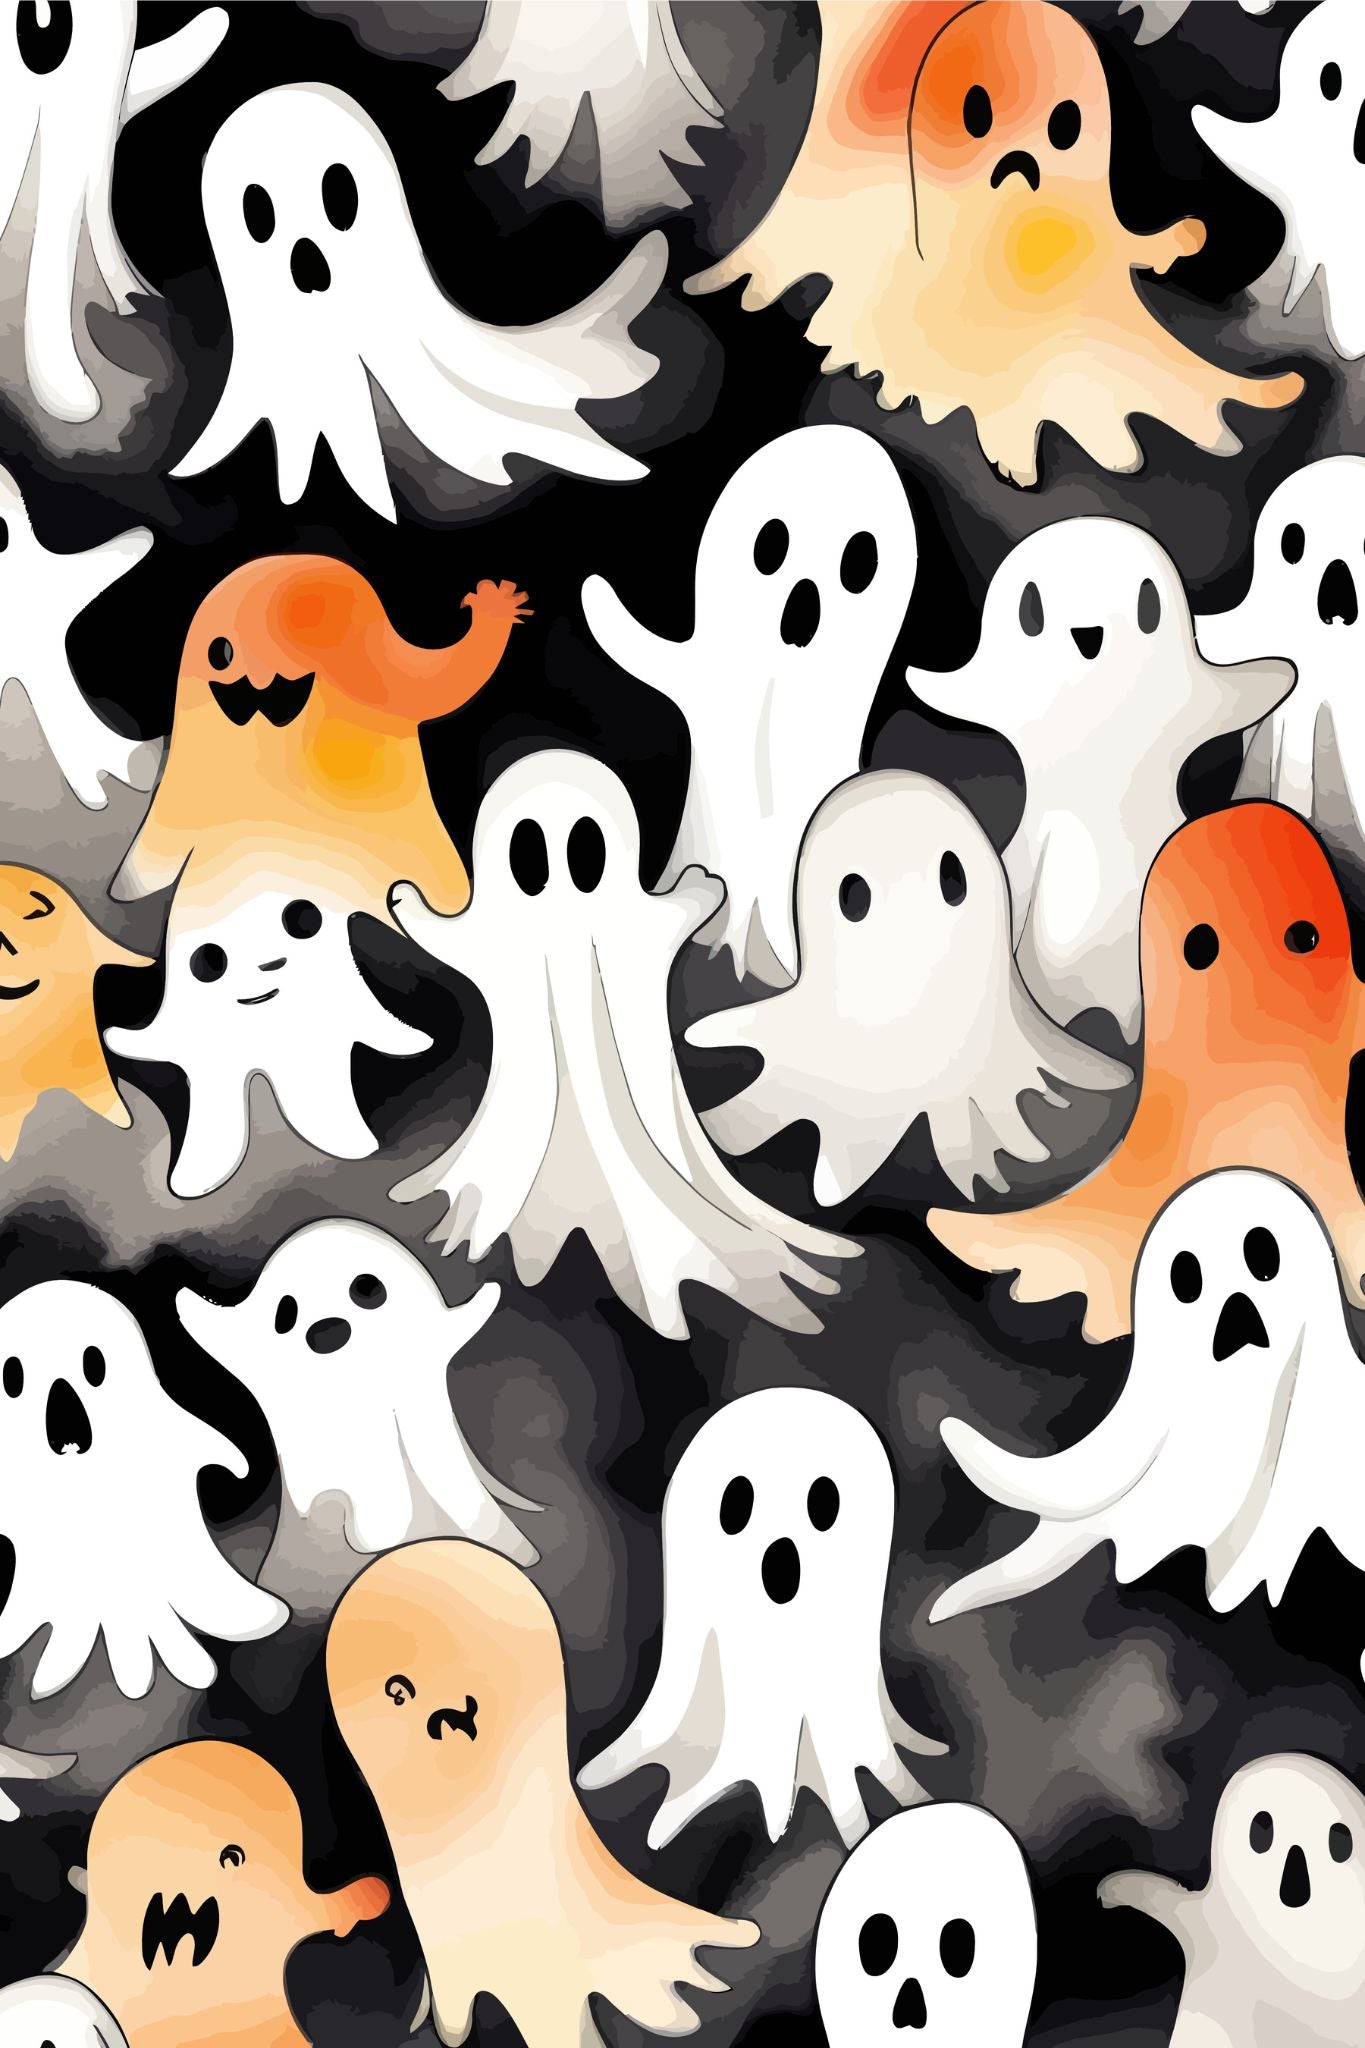 Creepy og kult halloweenkort. Motiv er i cartoon og forestiller små spøkelser